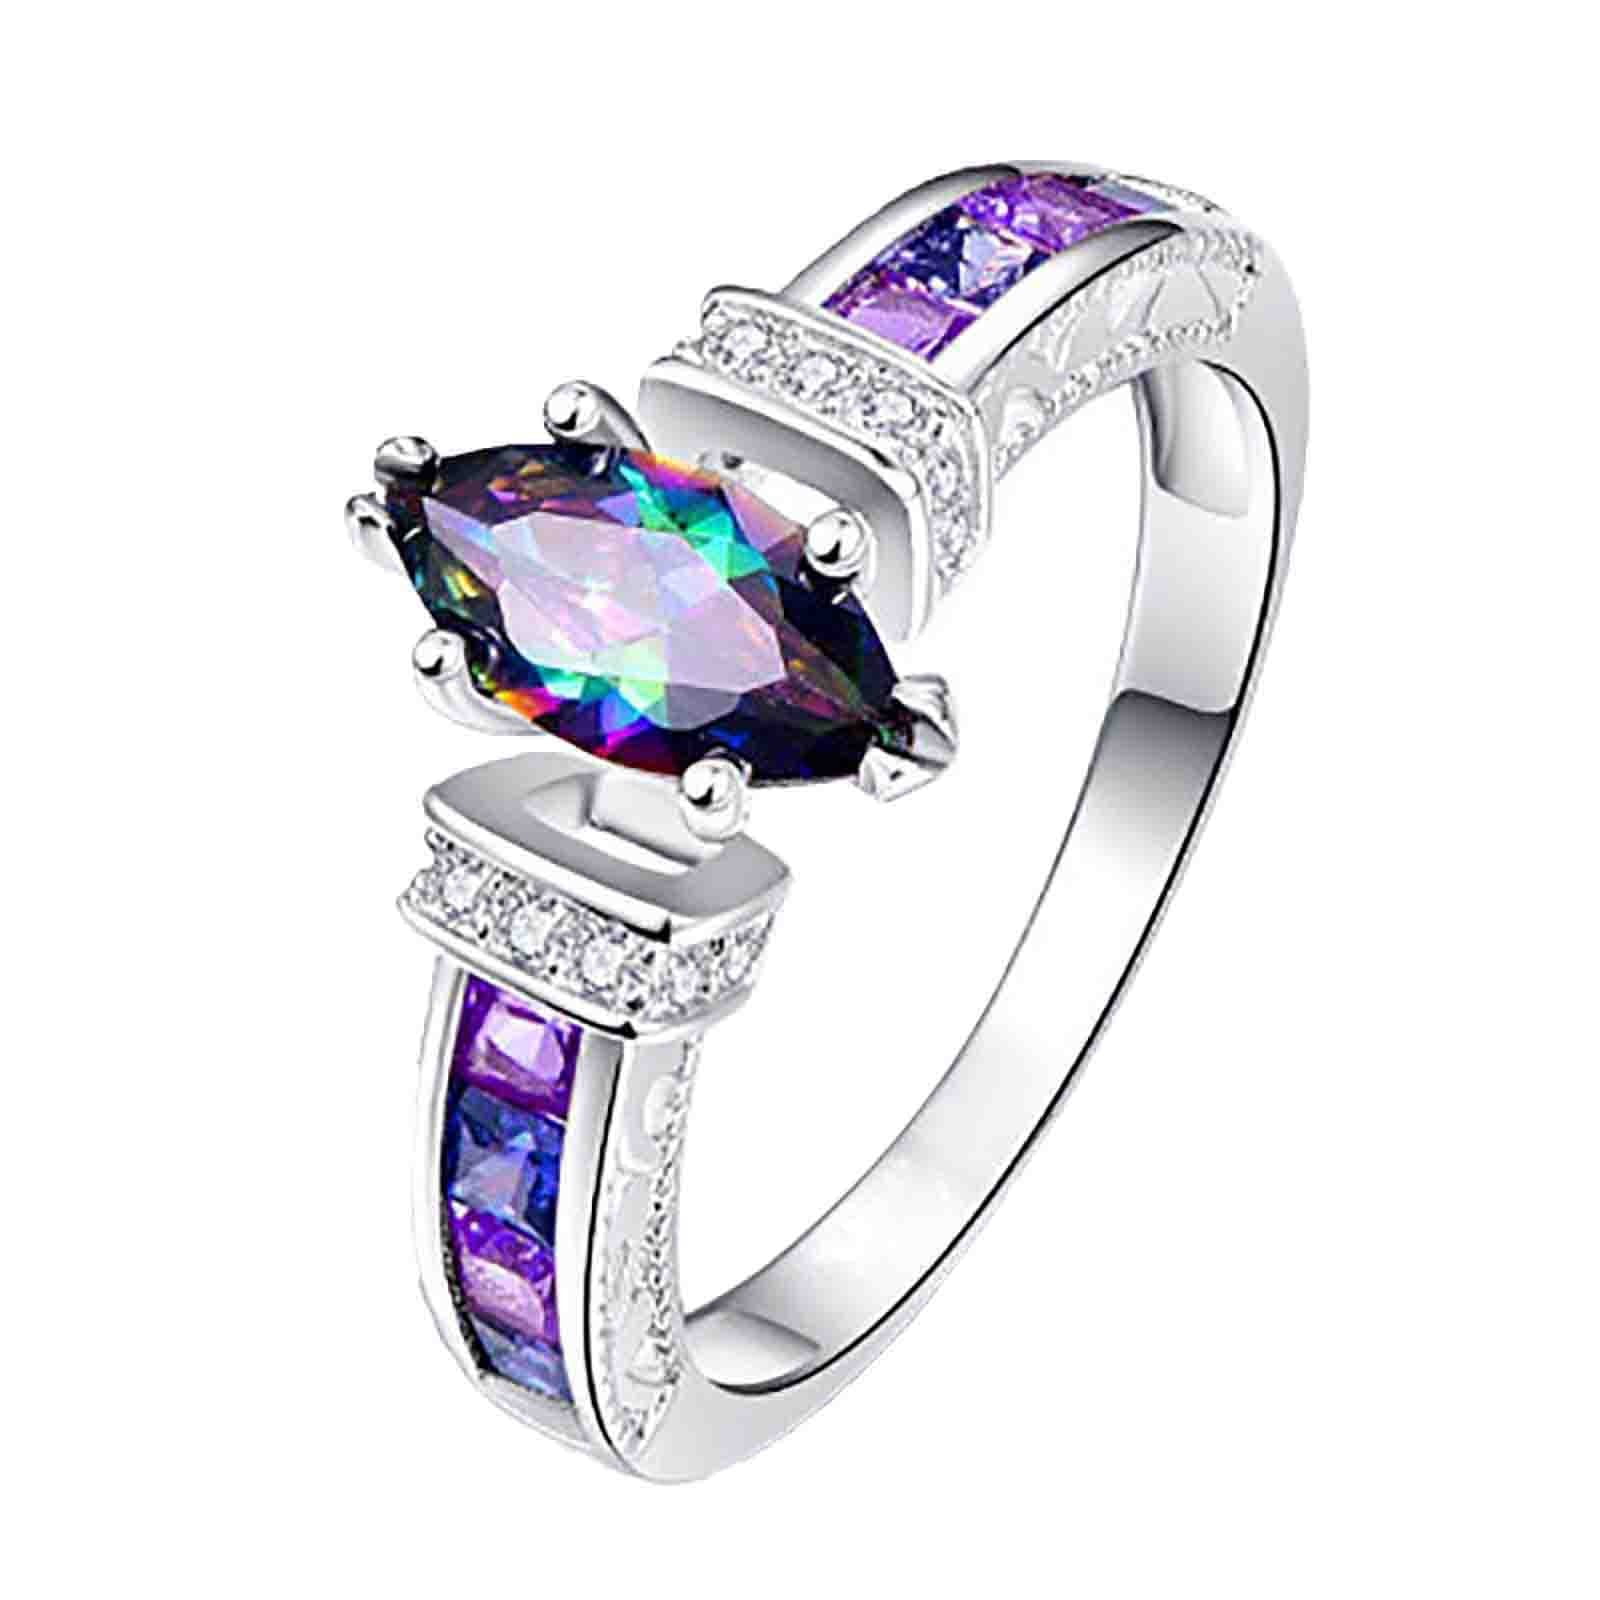 Women fashion jewelry 925 Silver Amethyst zircon wedding ring size 6-10 